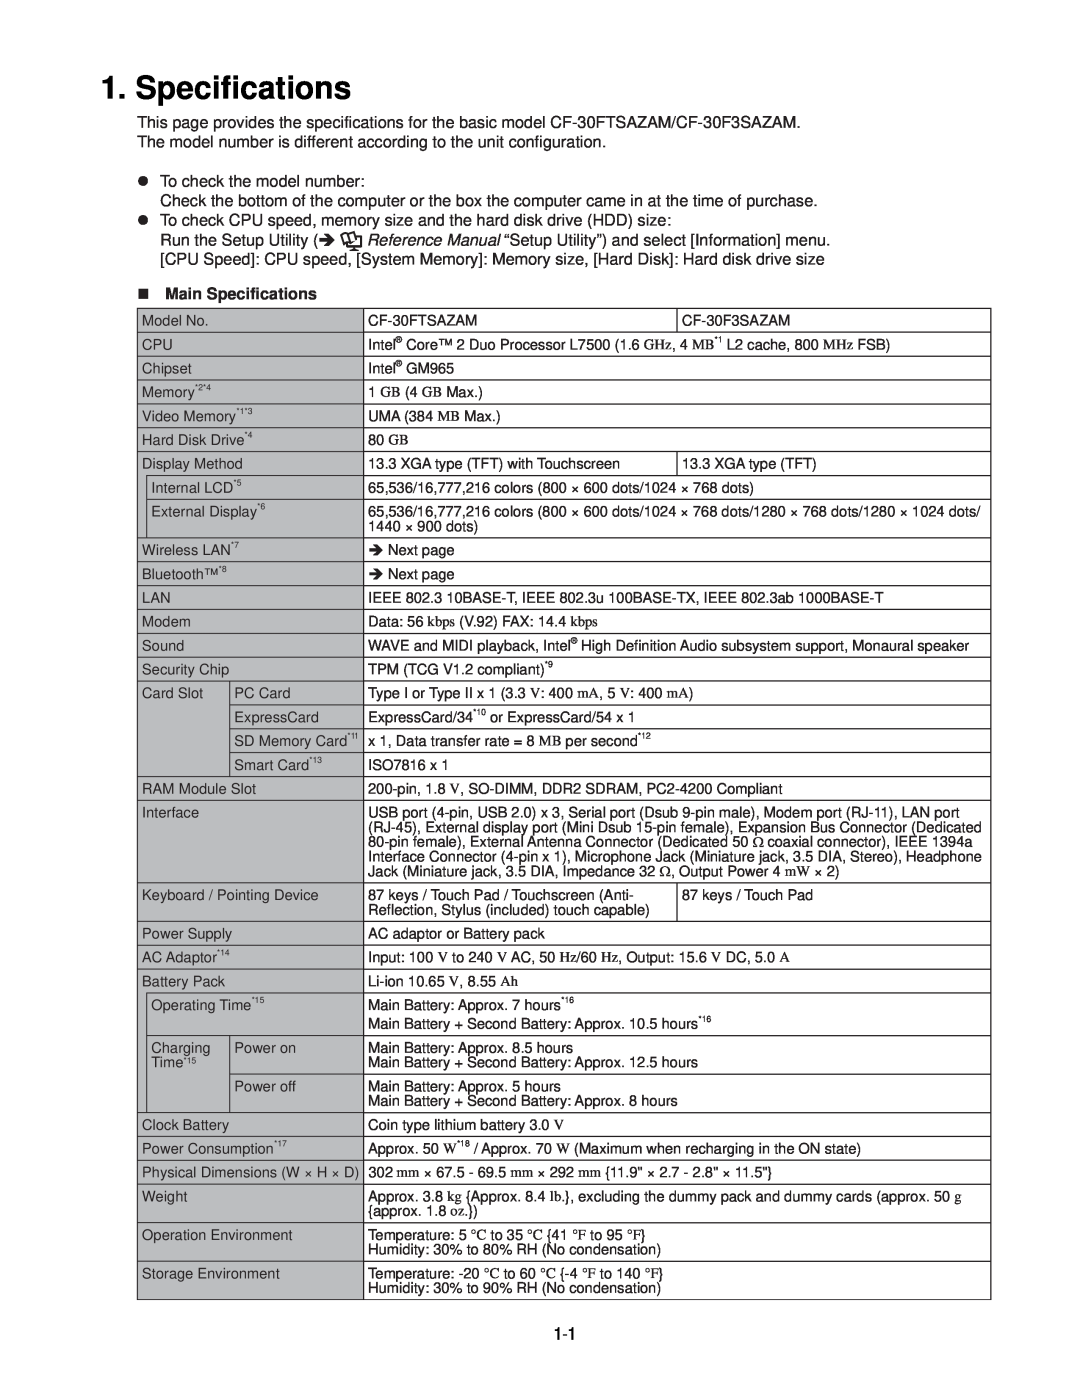 Philips CF-30FTSAZAM service manual Main Specifications 